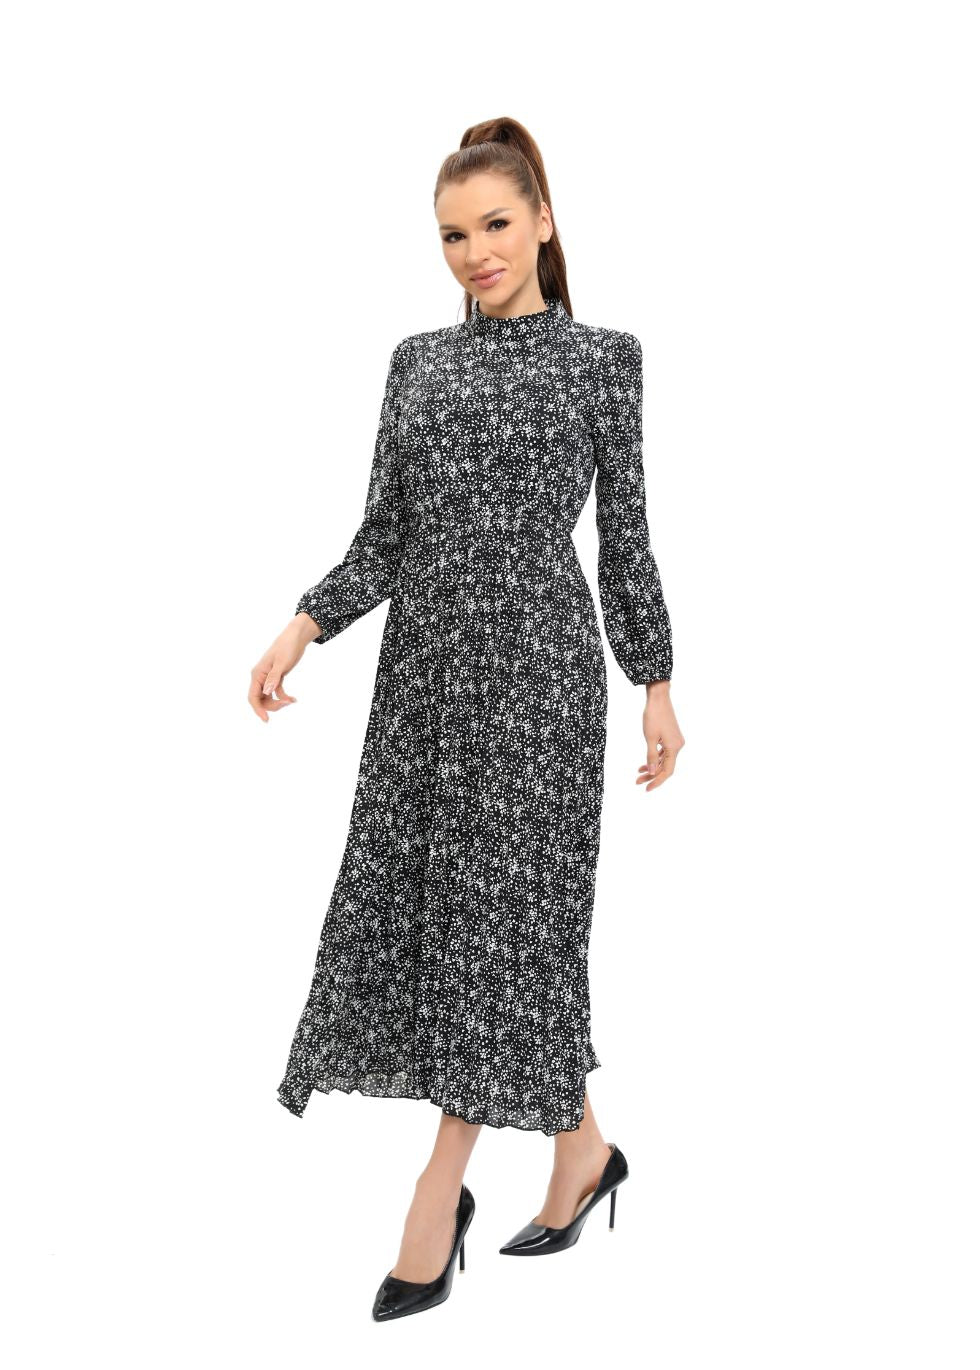 Elegant Floral Print Long Sleeve Midi Dress with Modest Cut - MissFinchNYC